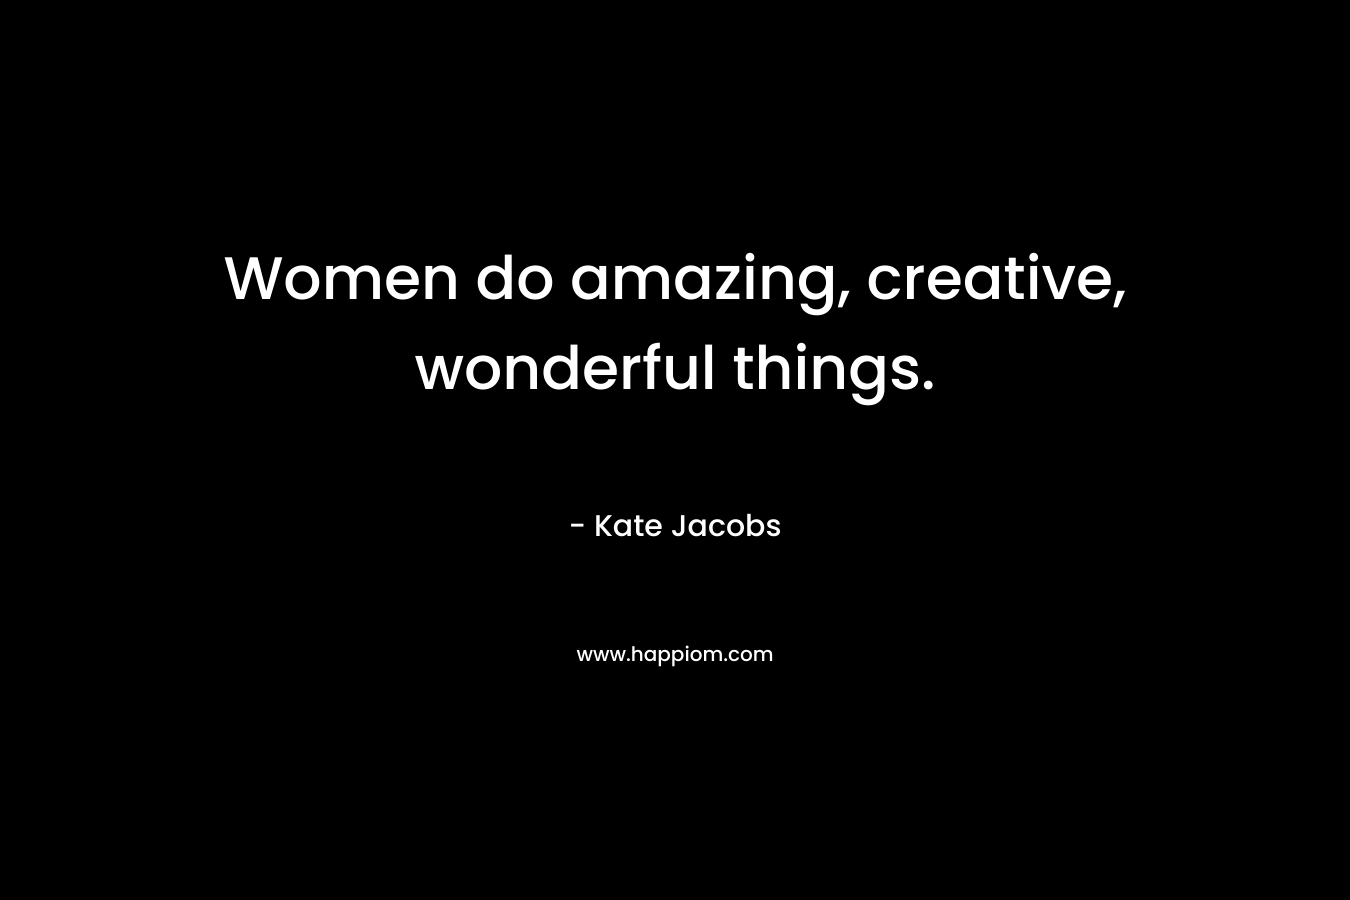 Women do amazing, creative, wonderful things.